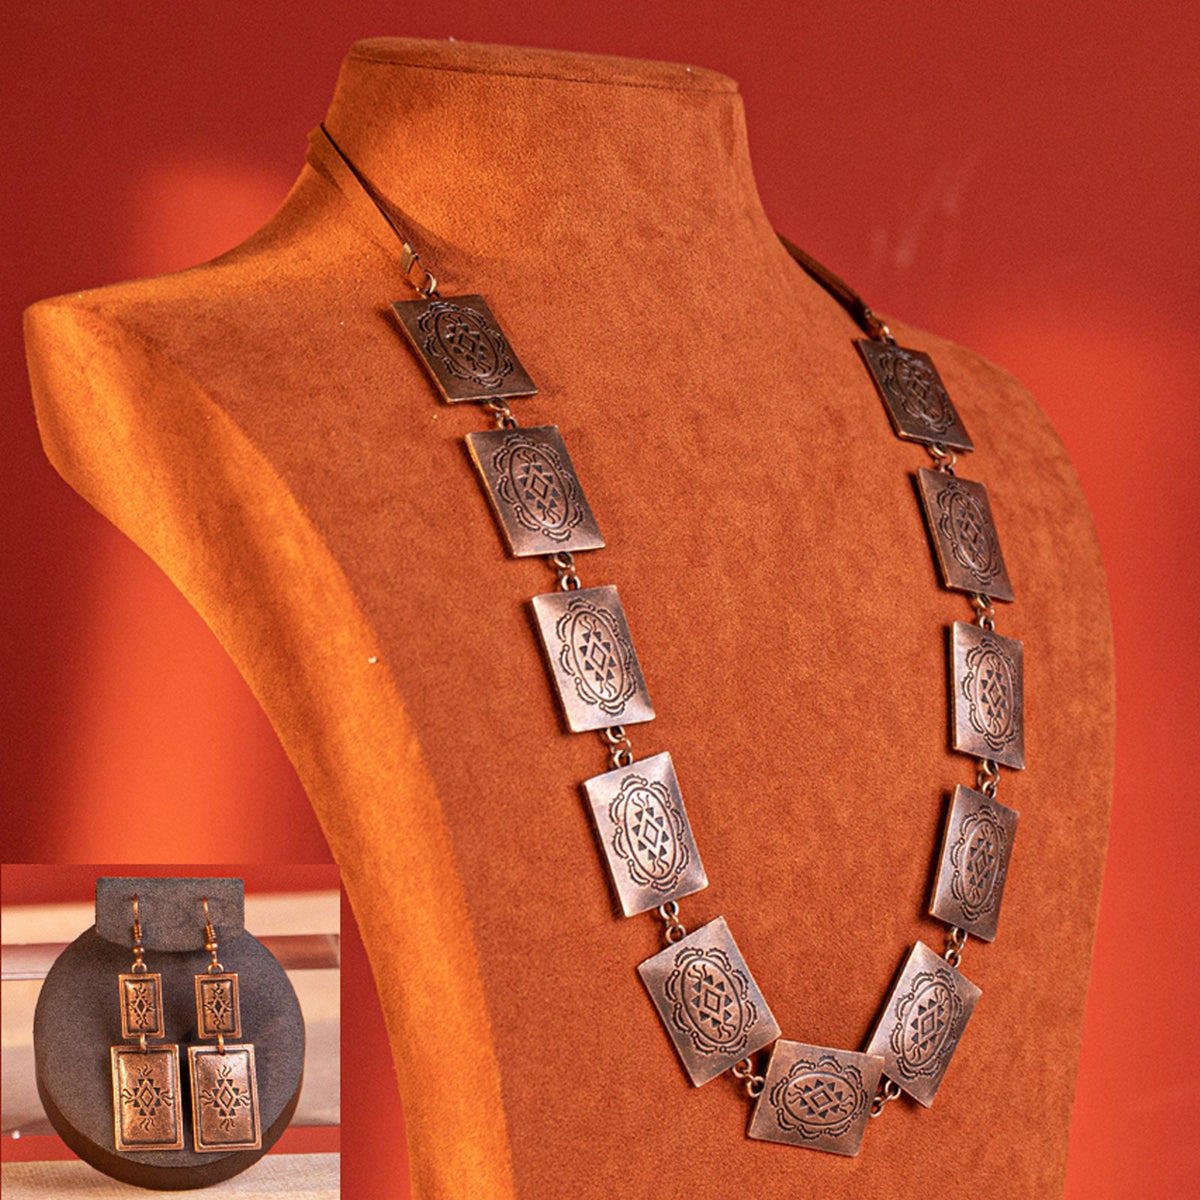 Wrangler Jewelry Sets Bohemian Pendant Necklace Earrings